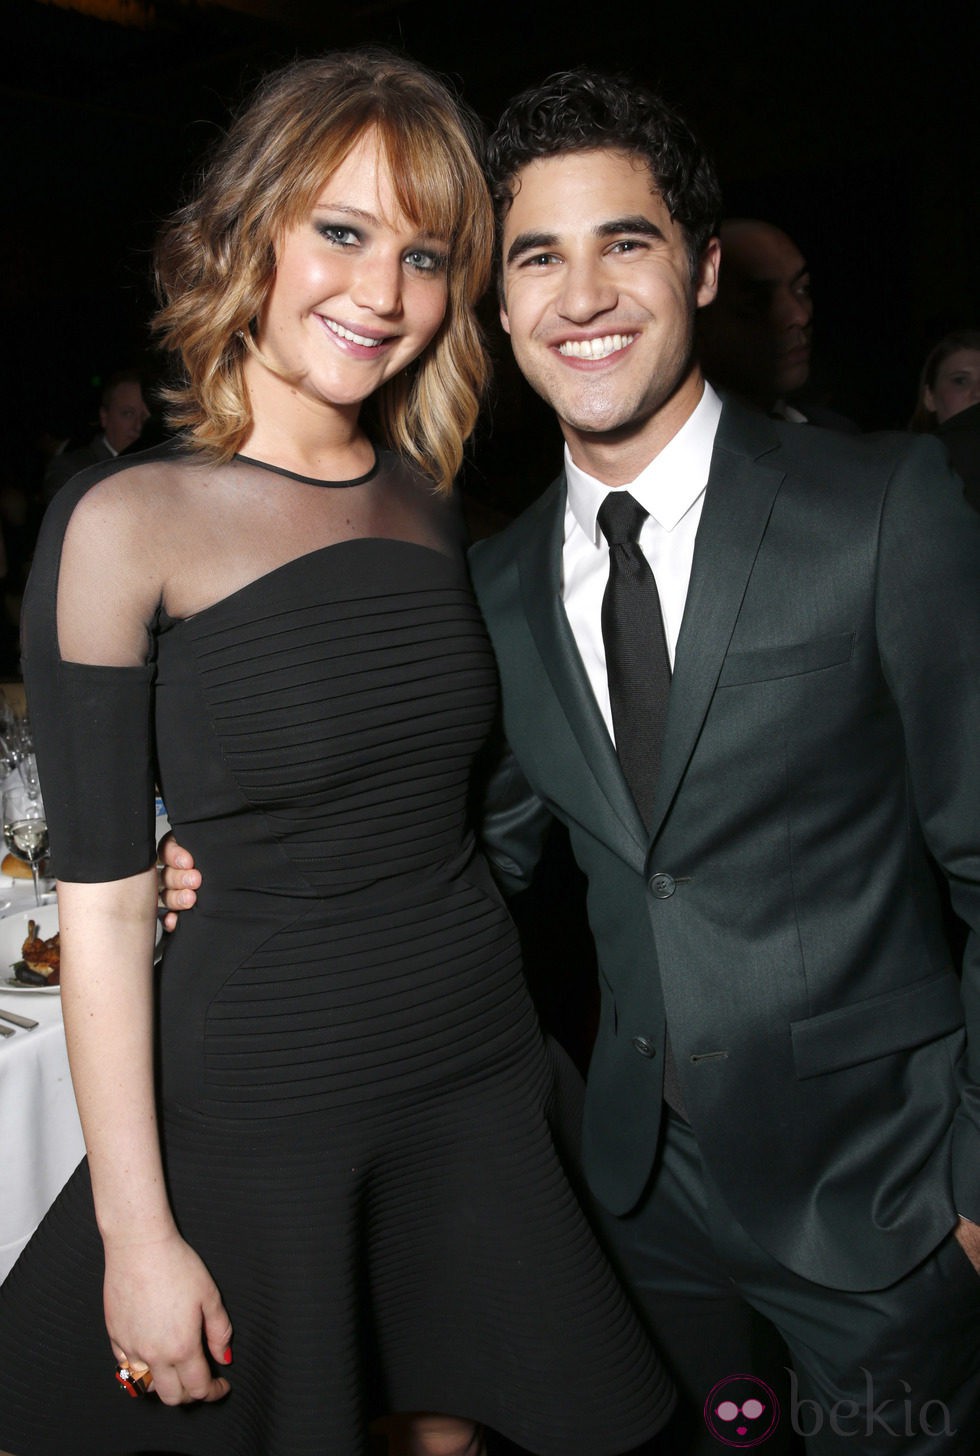 Jennifer Lawrence y Darren Criss en los Glaad Media Awards 2013 en Los Angeles